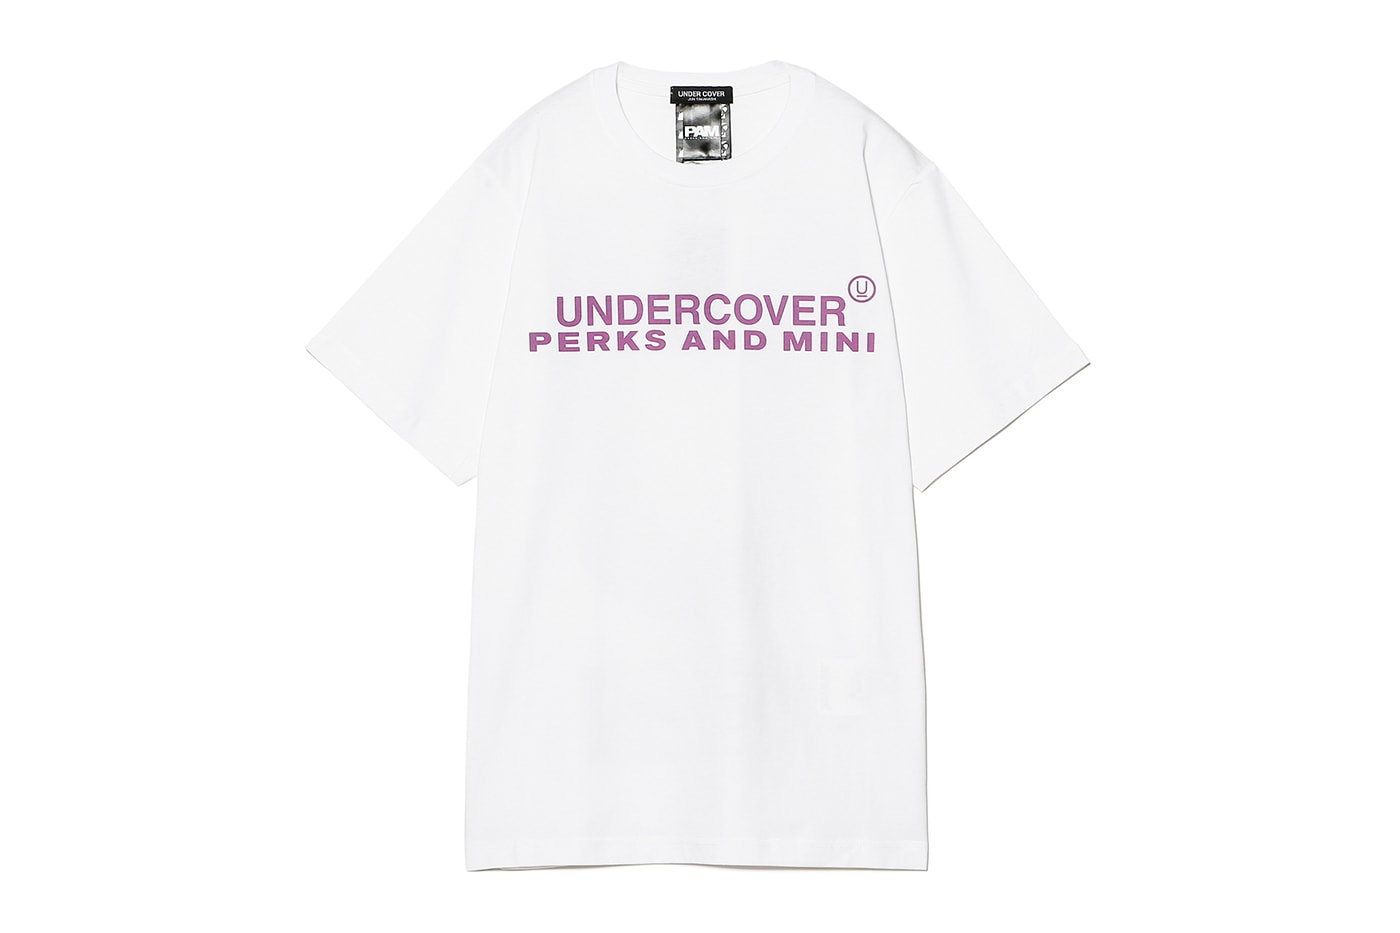 UNDERCOVER PAM 2020 Capsule menswear streetwear spring summer20 t shirts hoodies graphics tees